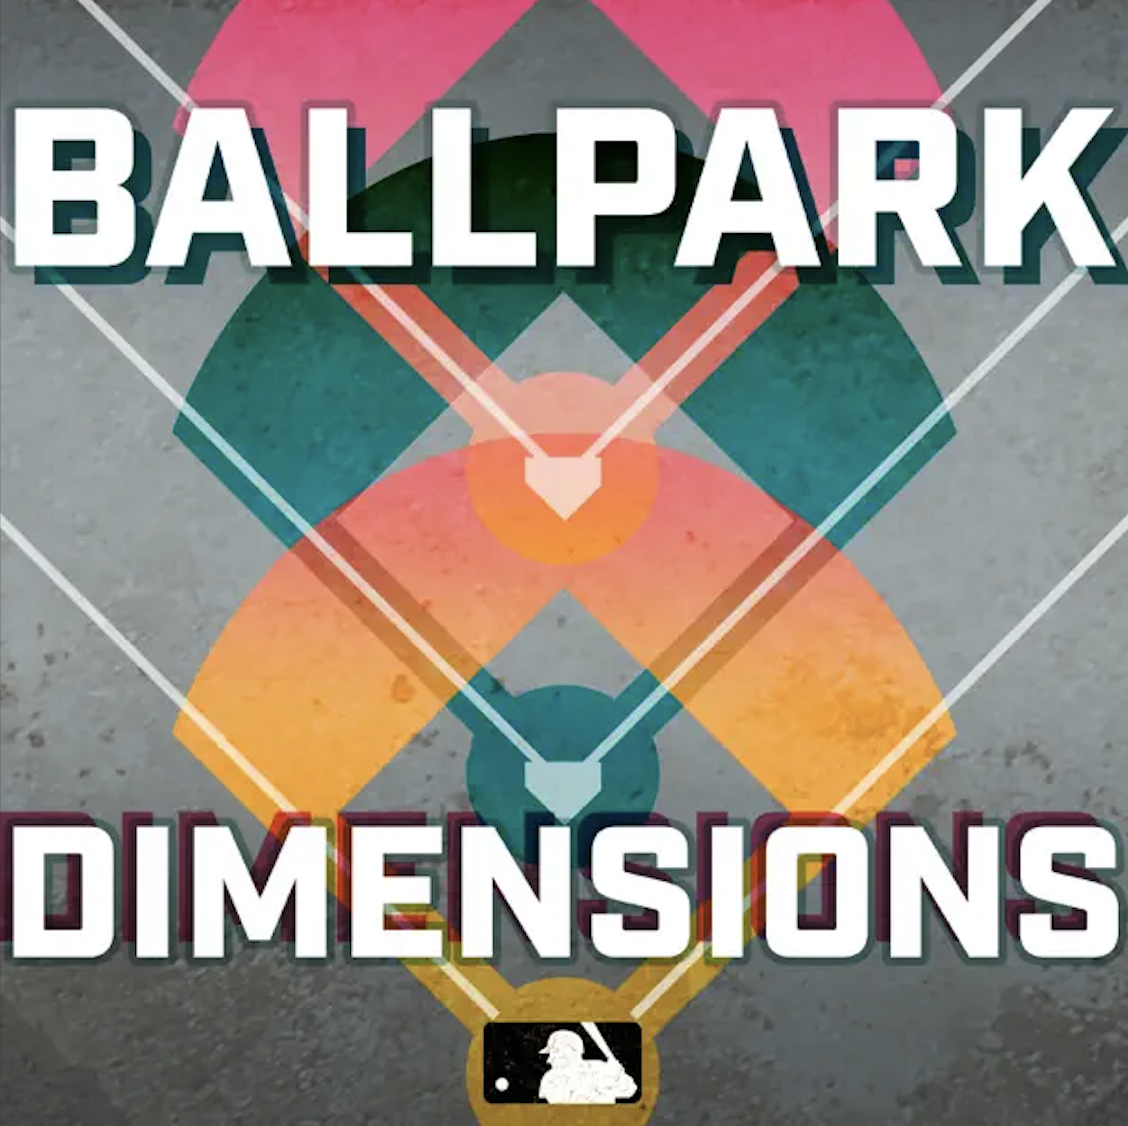 Ballpark Dimensions podcast